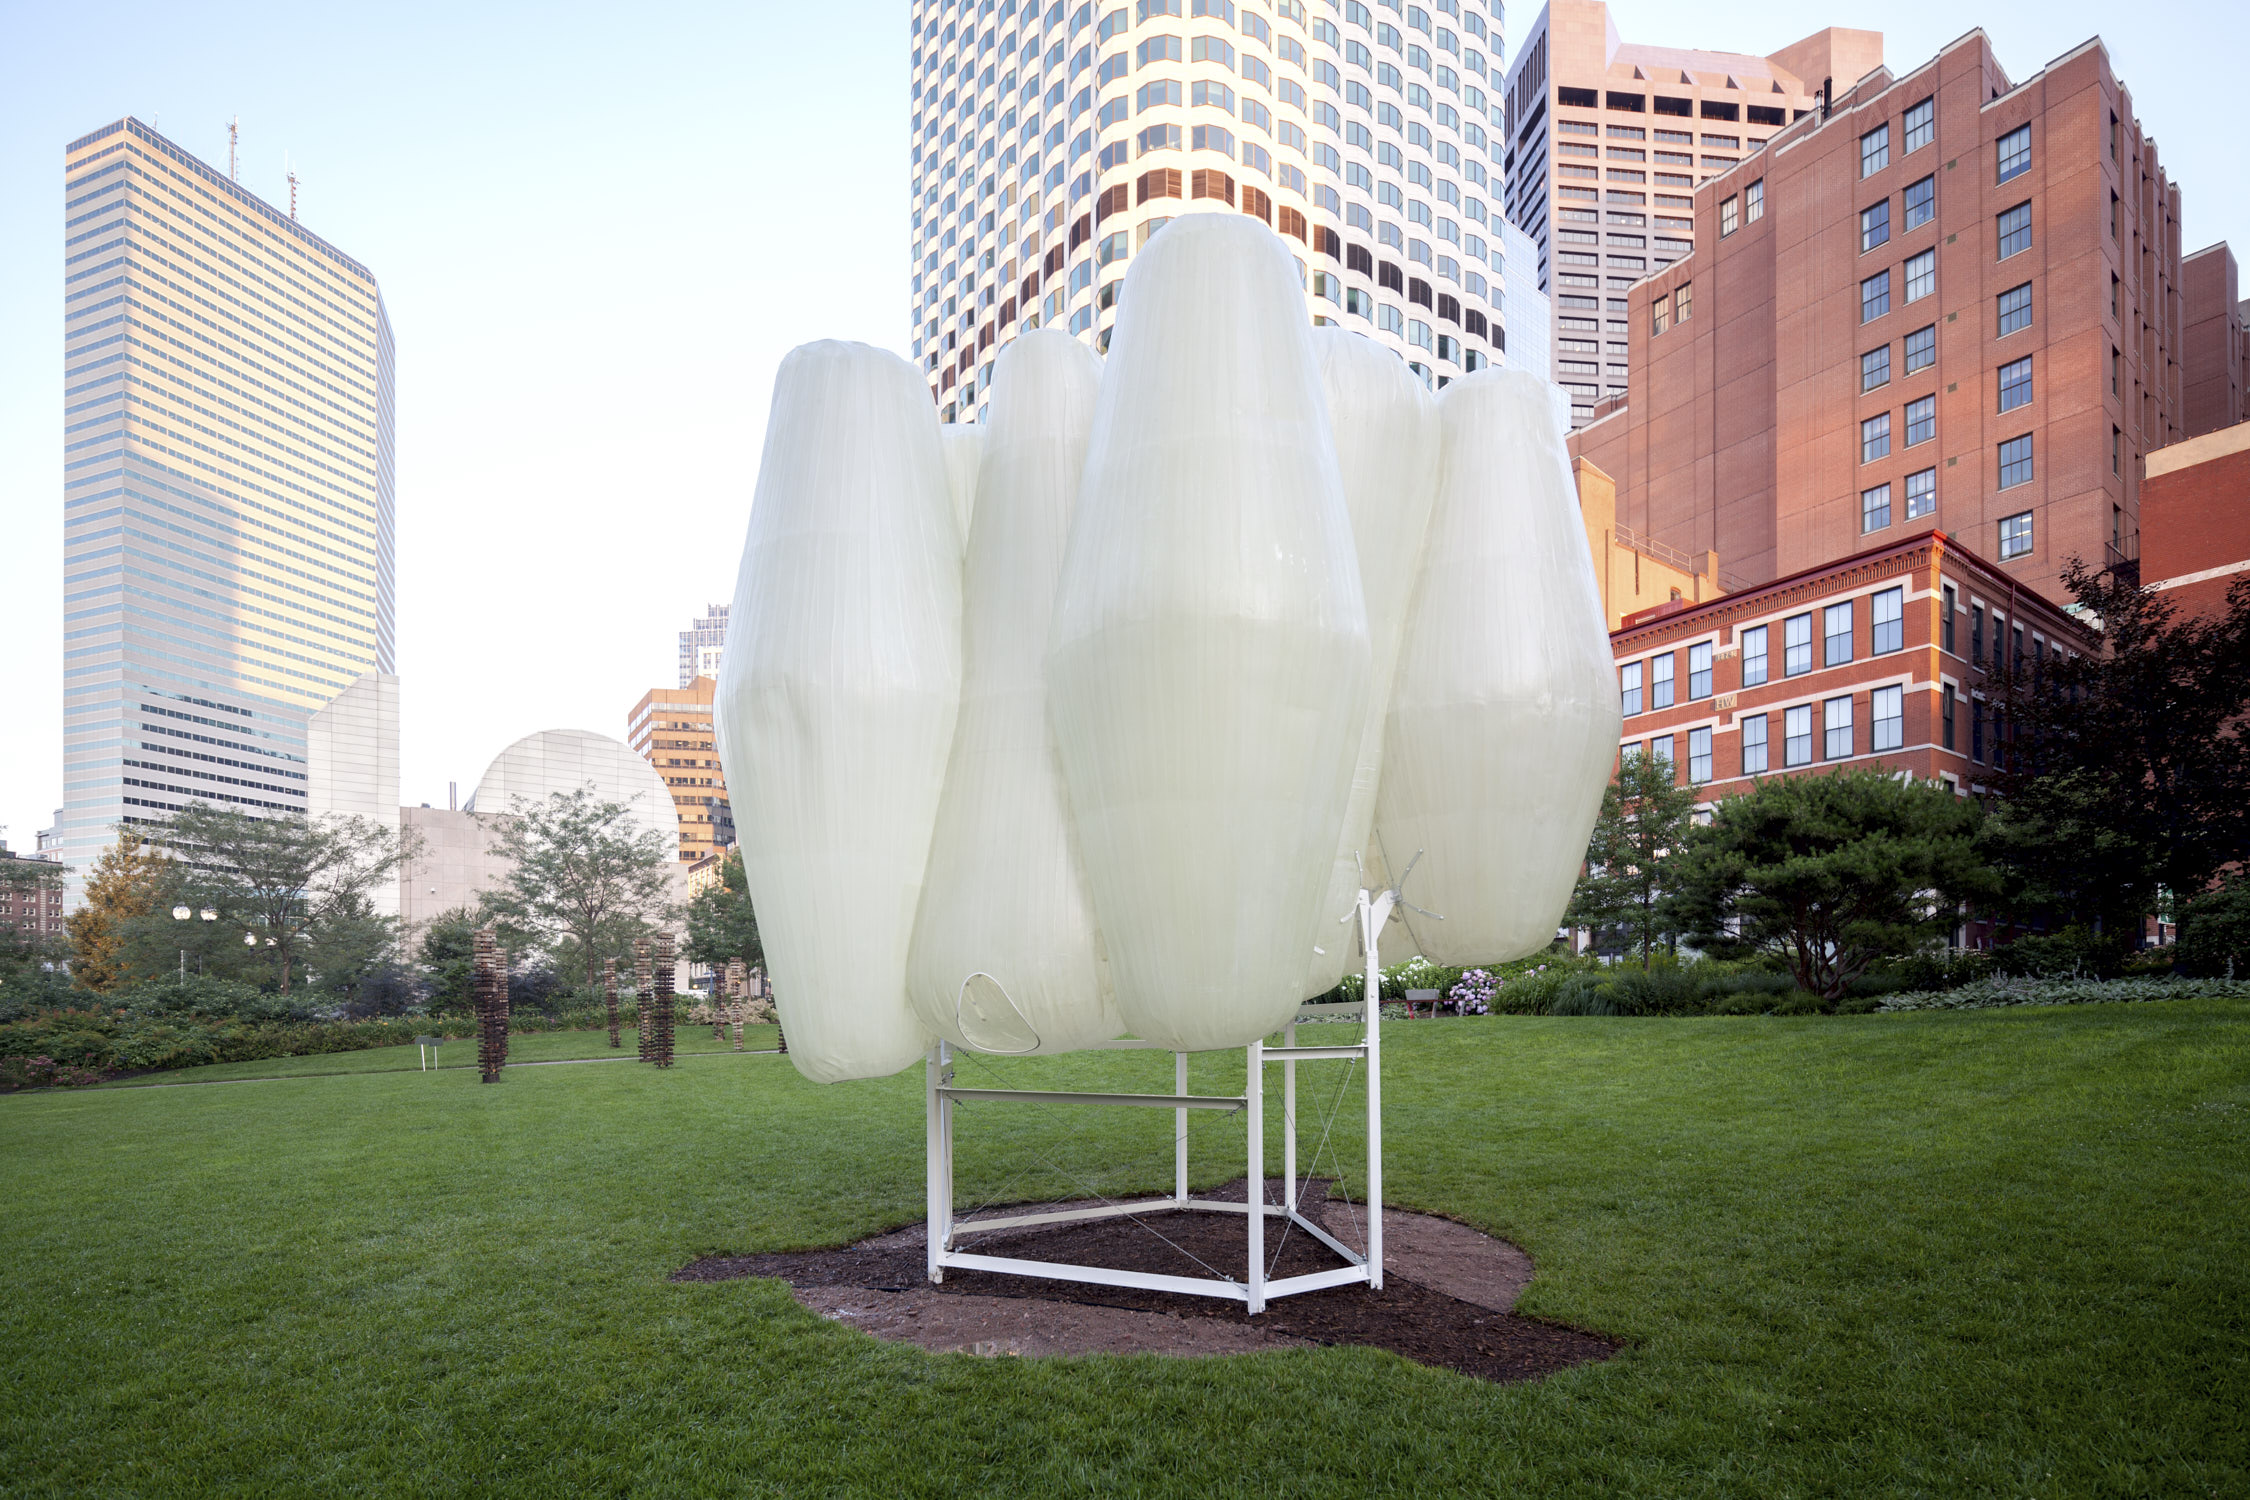 Design Biennial Boston 2015